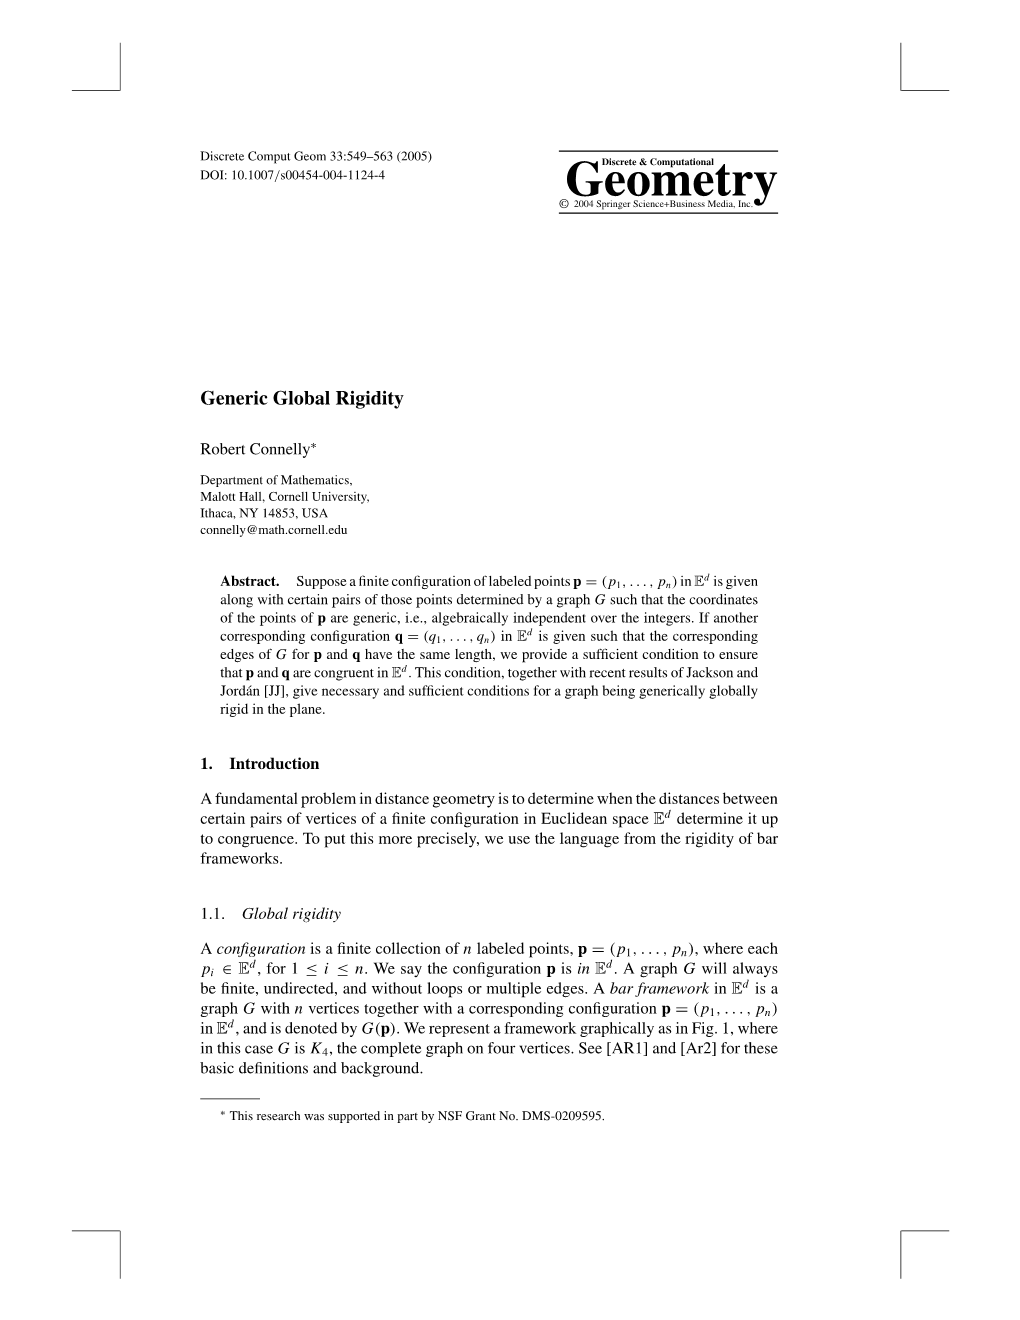 Geometry © 2004 Springer Science+Business Media, Inc